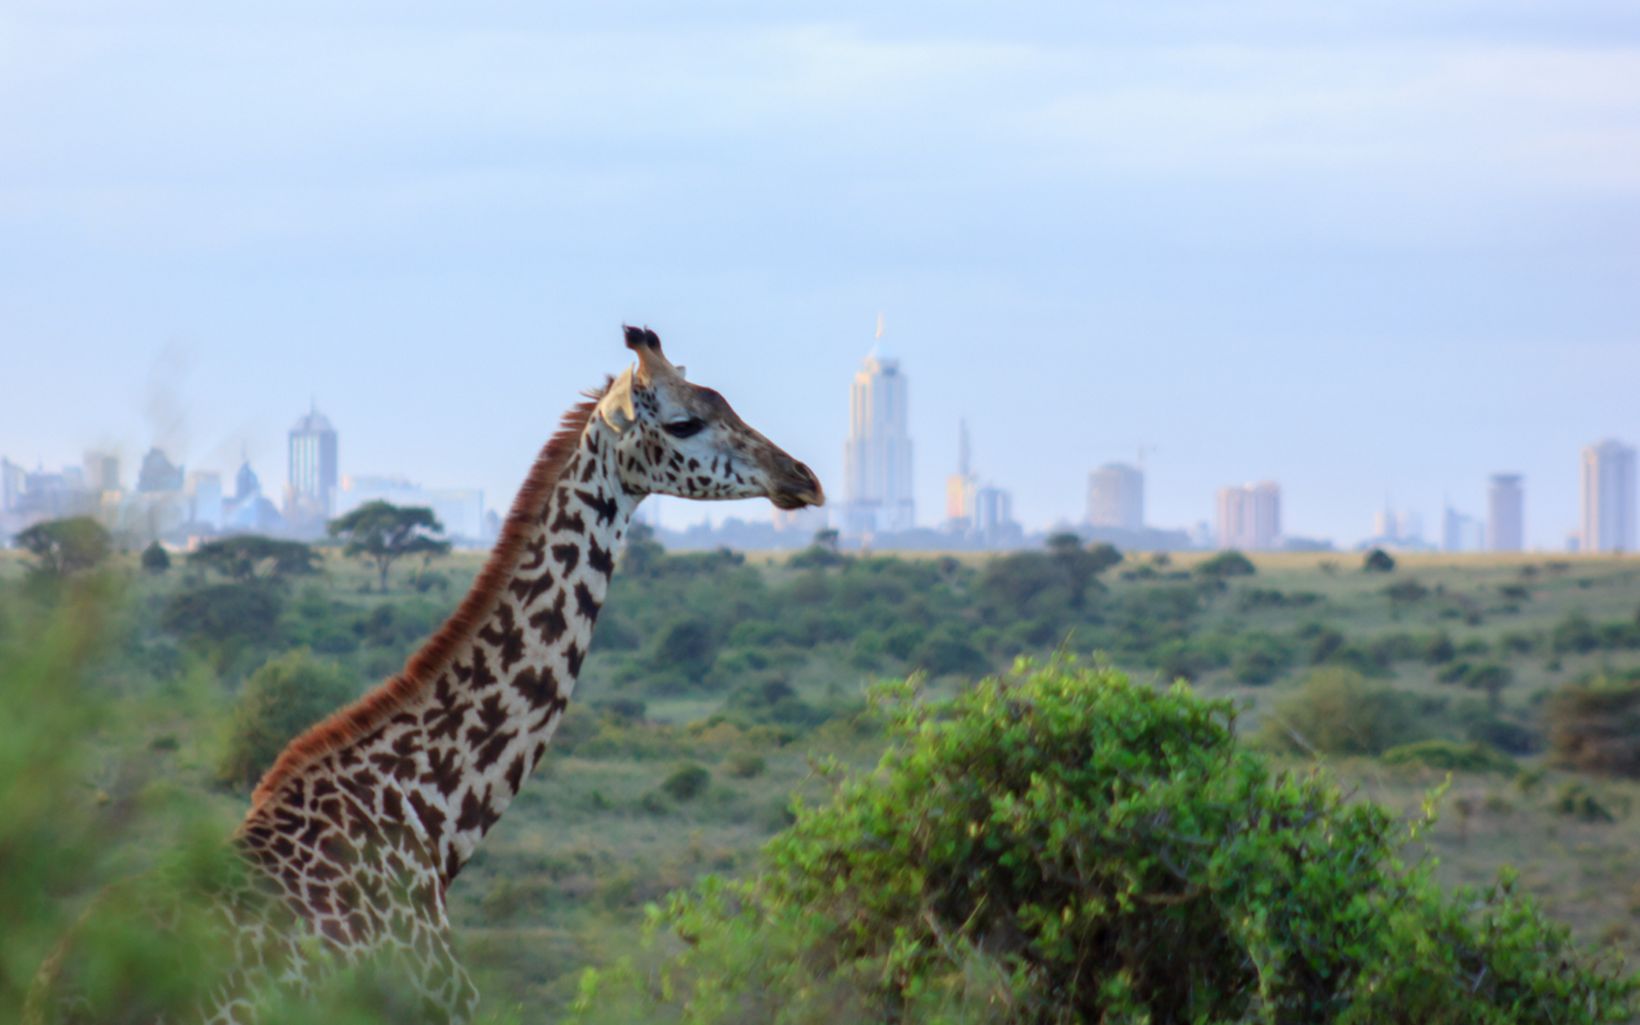 A Masai giraffe overlooking the Nairobi skyline at the Nairobi National Park, Kenya.